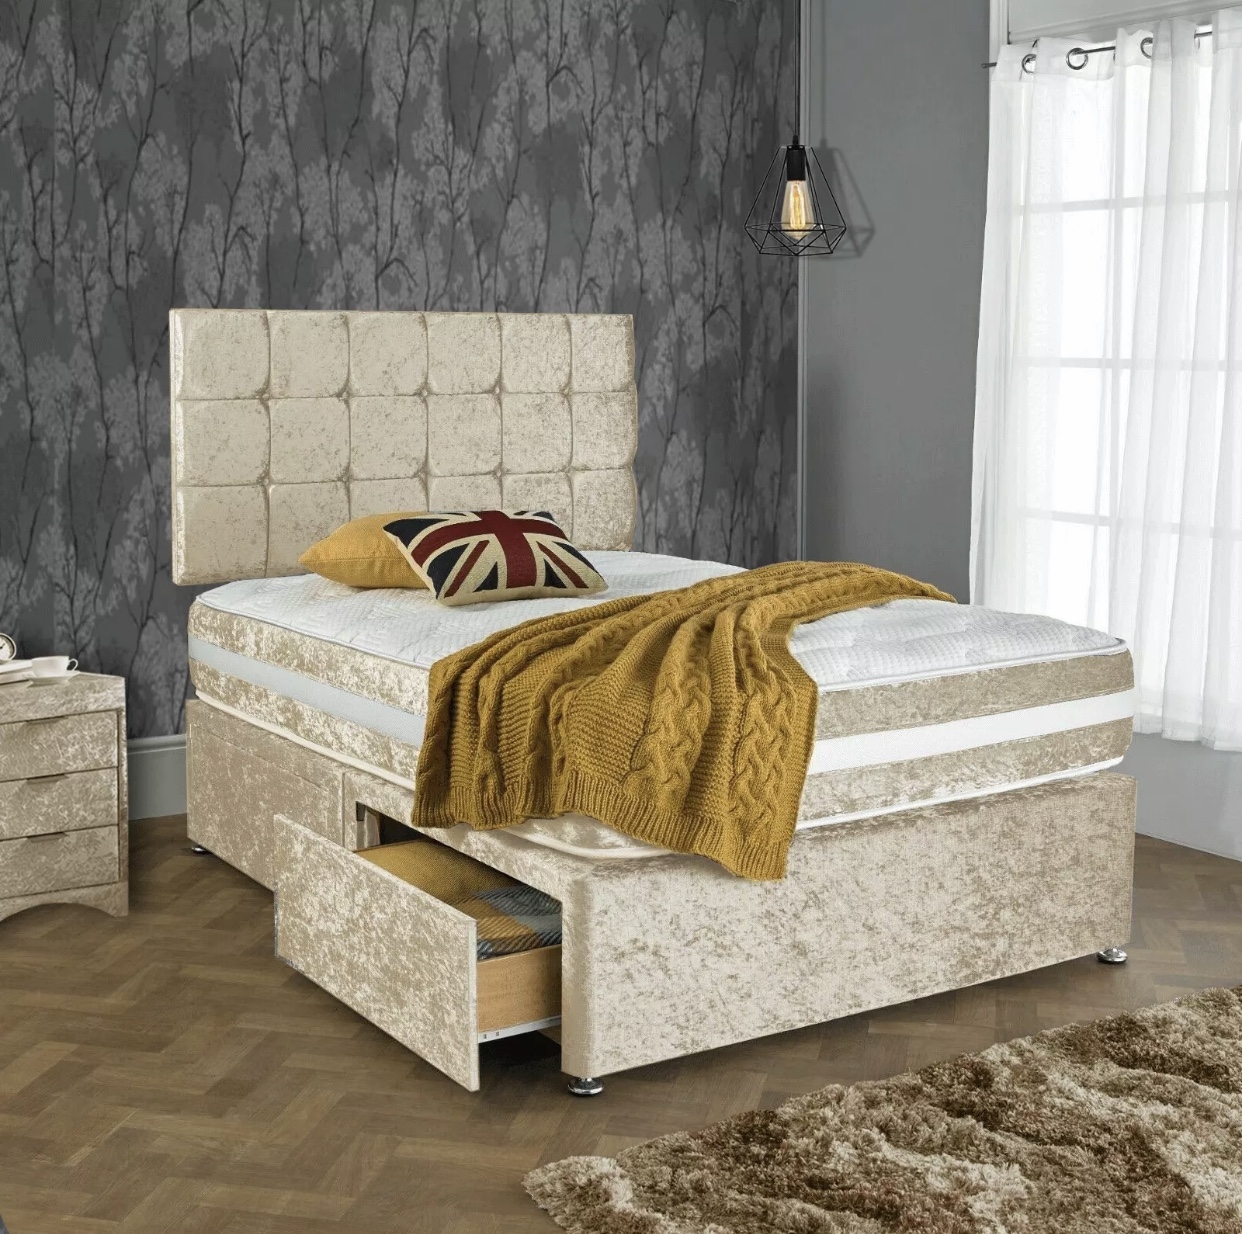 BedsDivans – Rosette Golden Crushed Velvet Divan Bed – Champagne – Single, Small Double, Double, King & Super King Available – Optional Headboard & Mattress